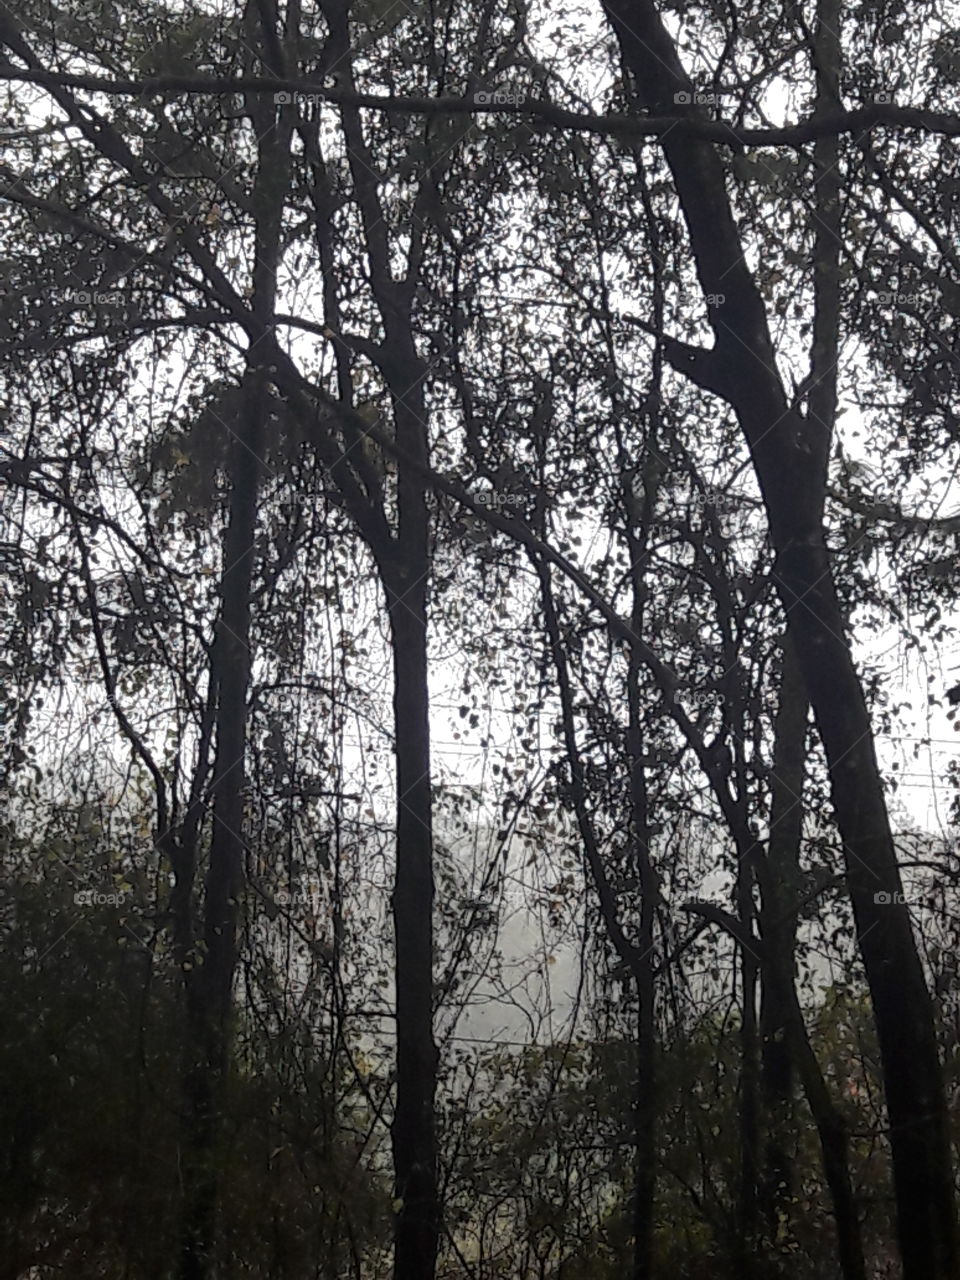 Misty morning trees.